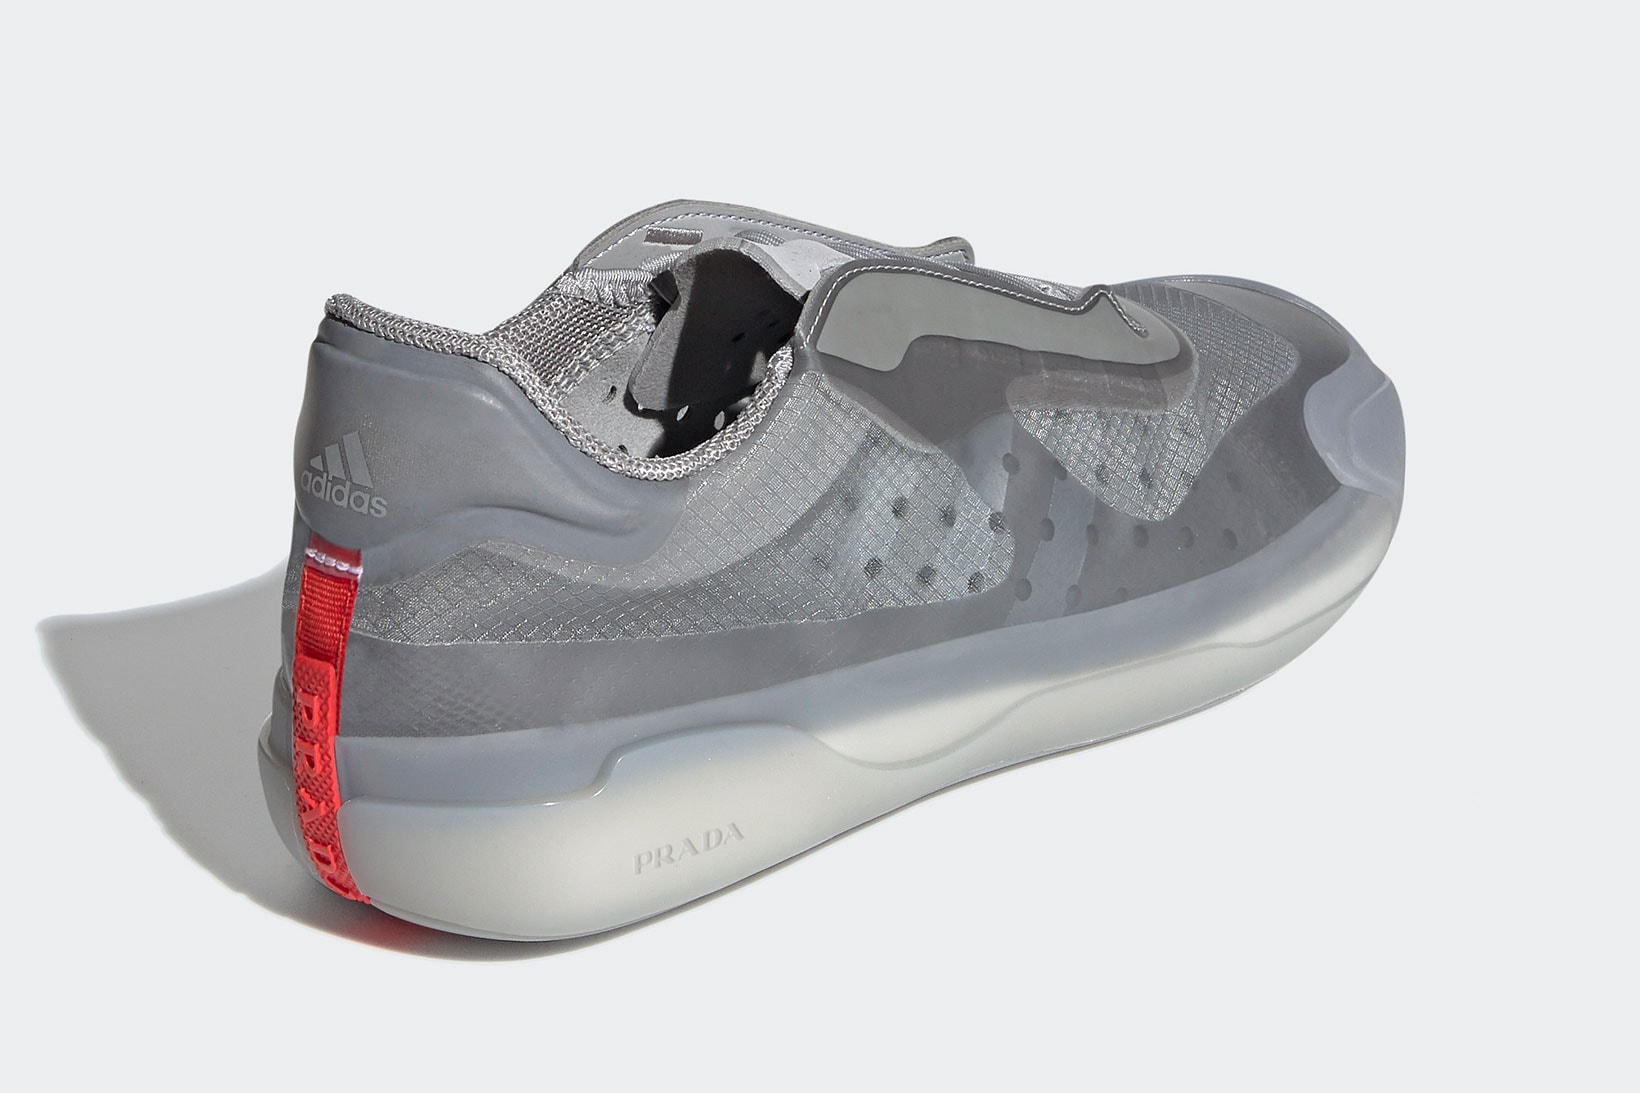 Prada adidas A+P LUNA ROSSA 21 Collaboration Gray Silver Heel Red